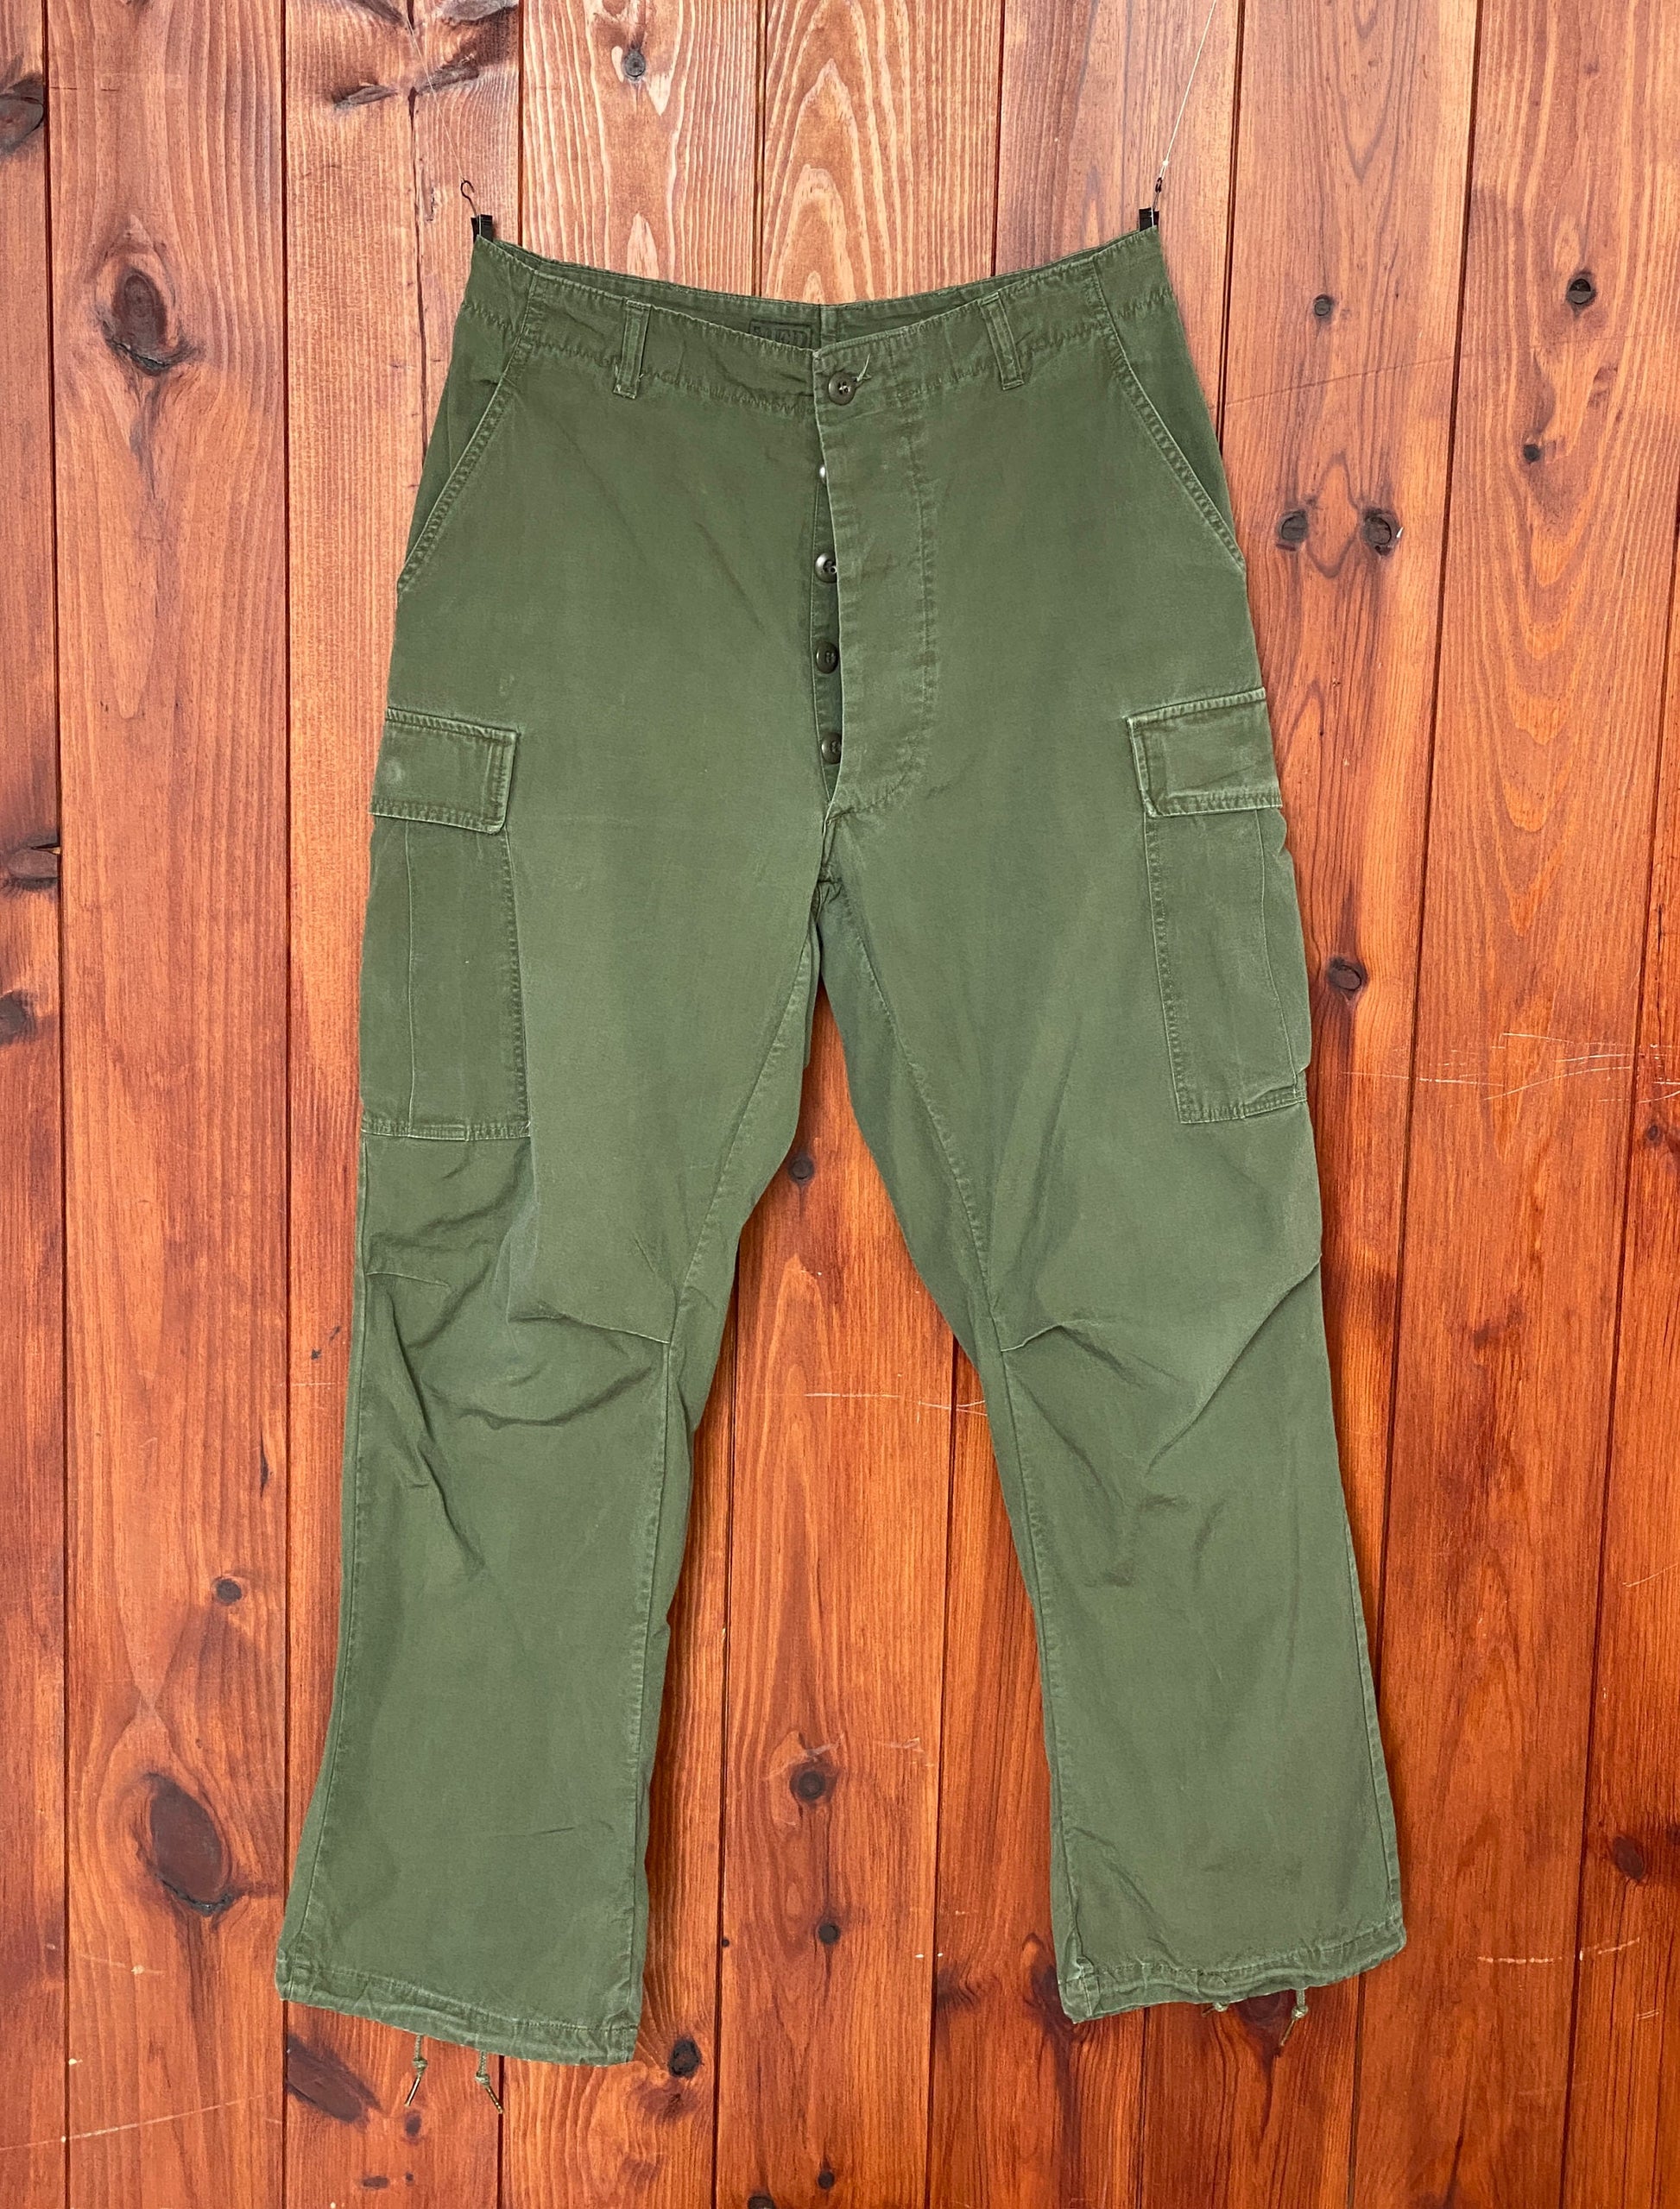 Medium Regular 1966 Authentic US Army Vietnam War Era OG-107 Jungle Pants | Vintage Military Apparel